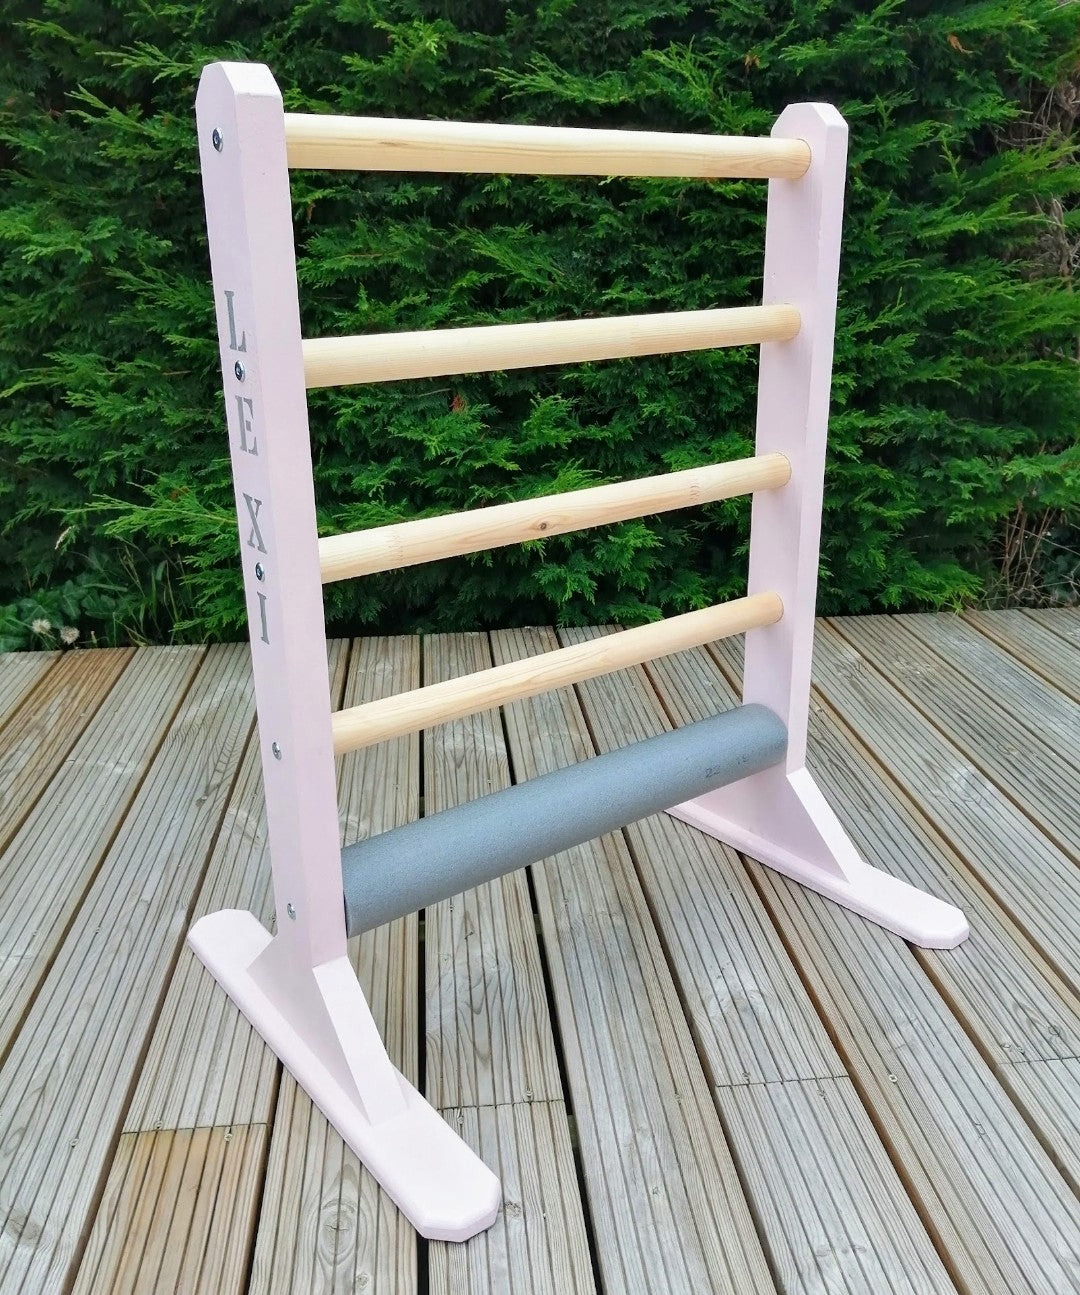 Stretch It Out - The Original Stretch Ladders